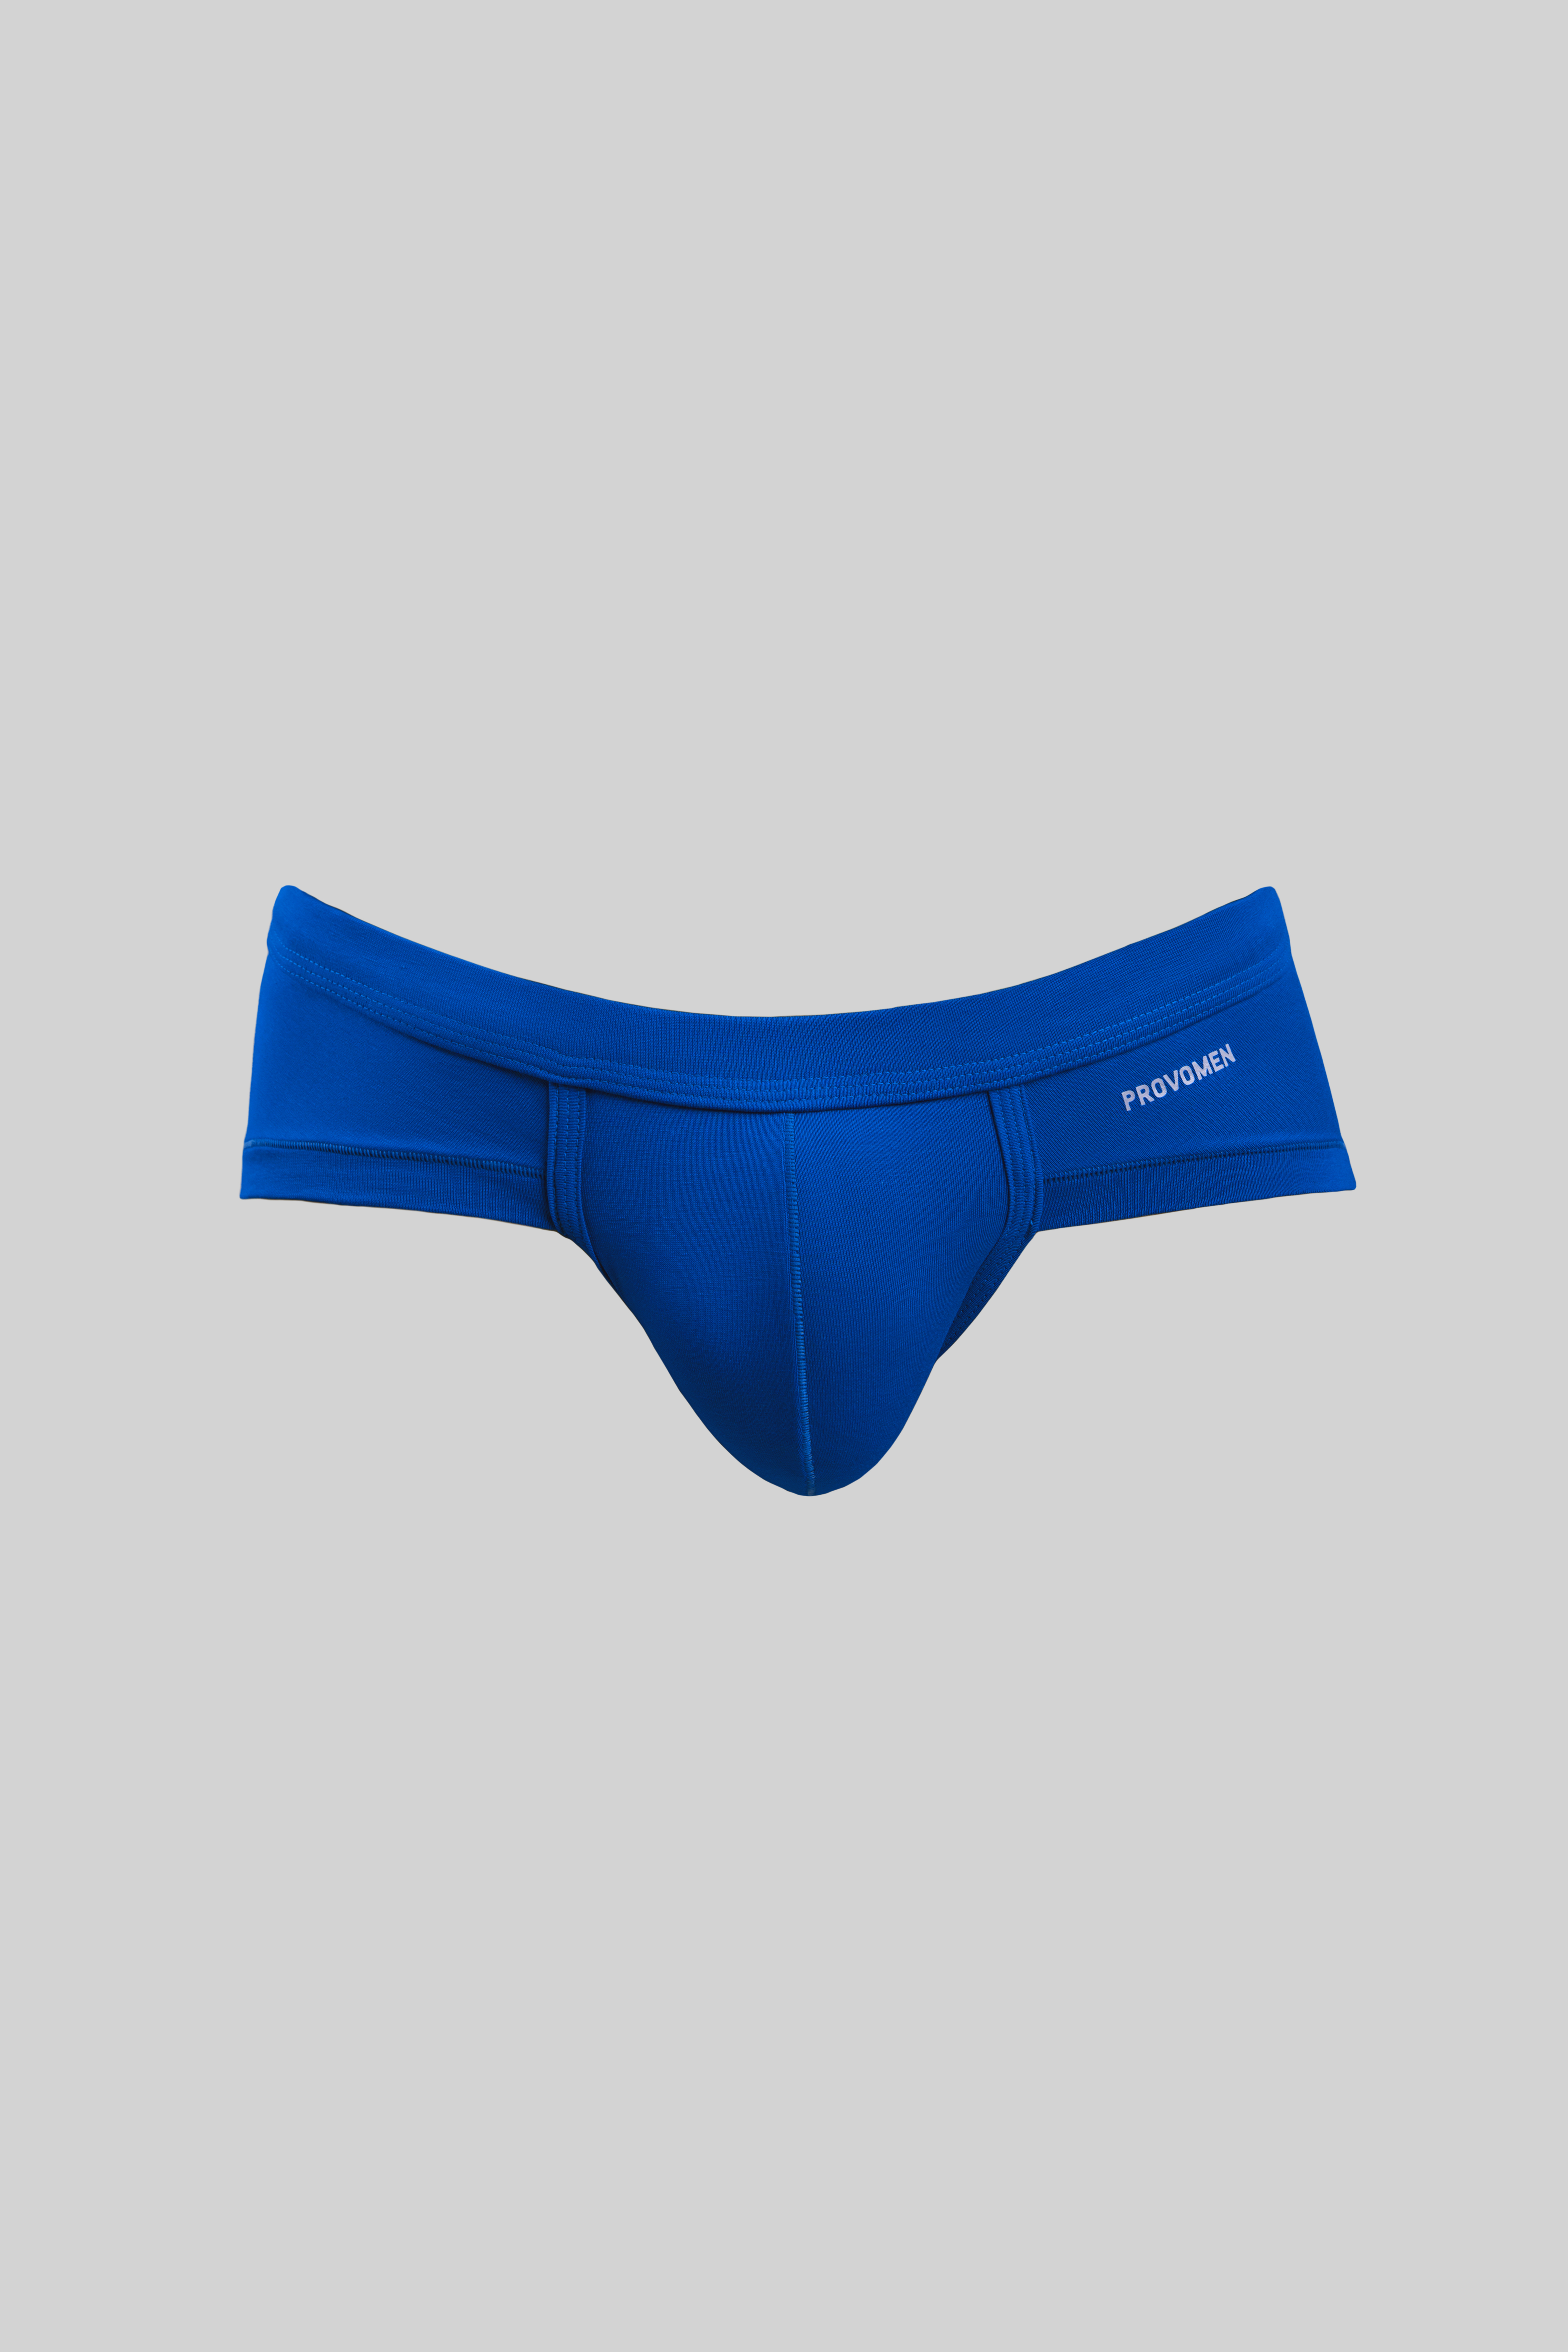 Hipster Briefs (Glow Blue) - official online store of men's underwear  Provomen